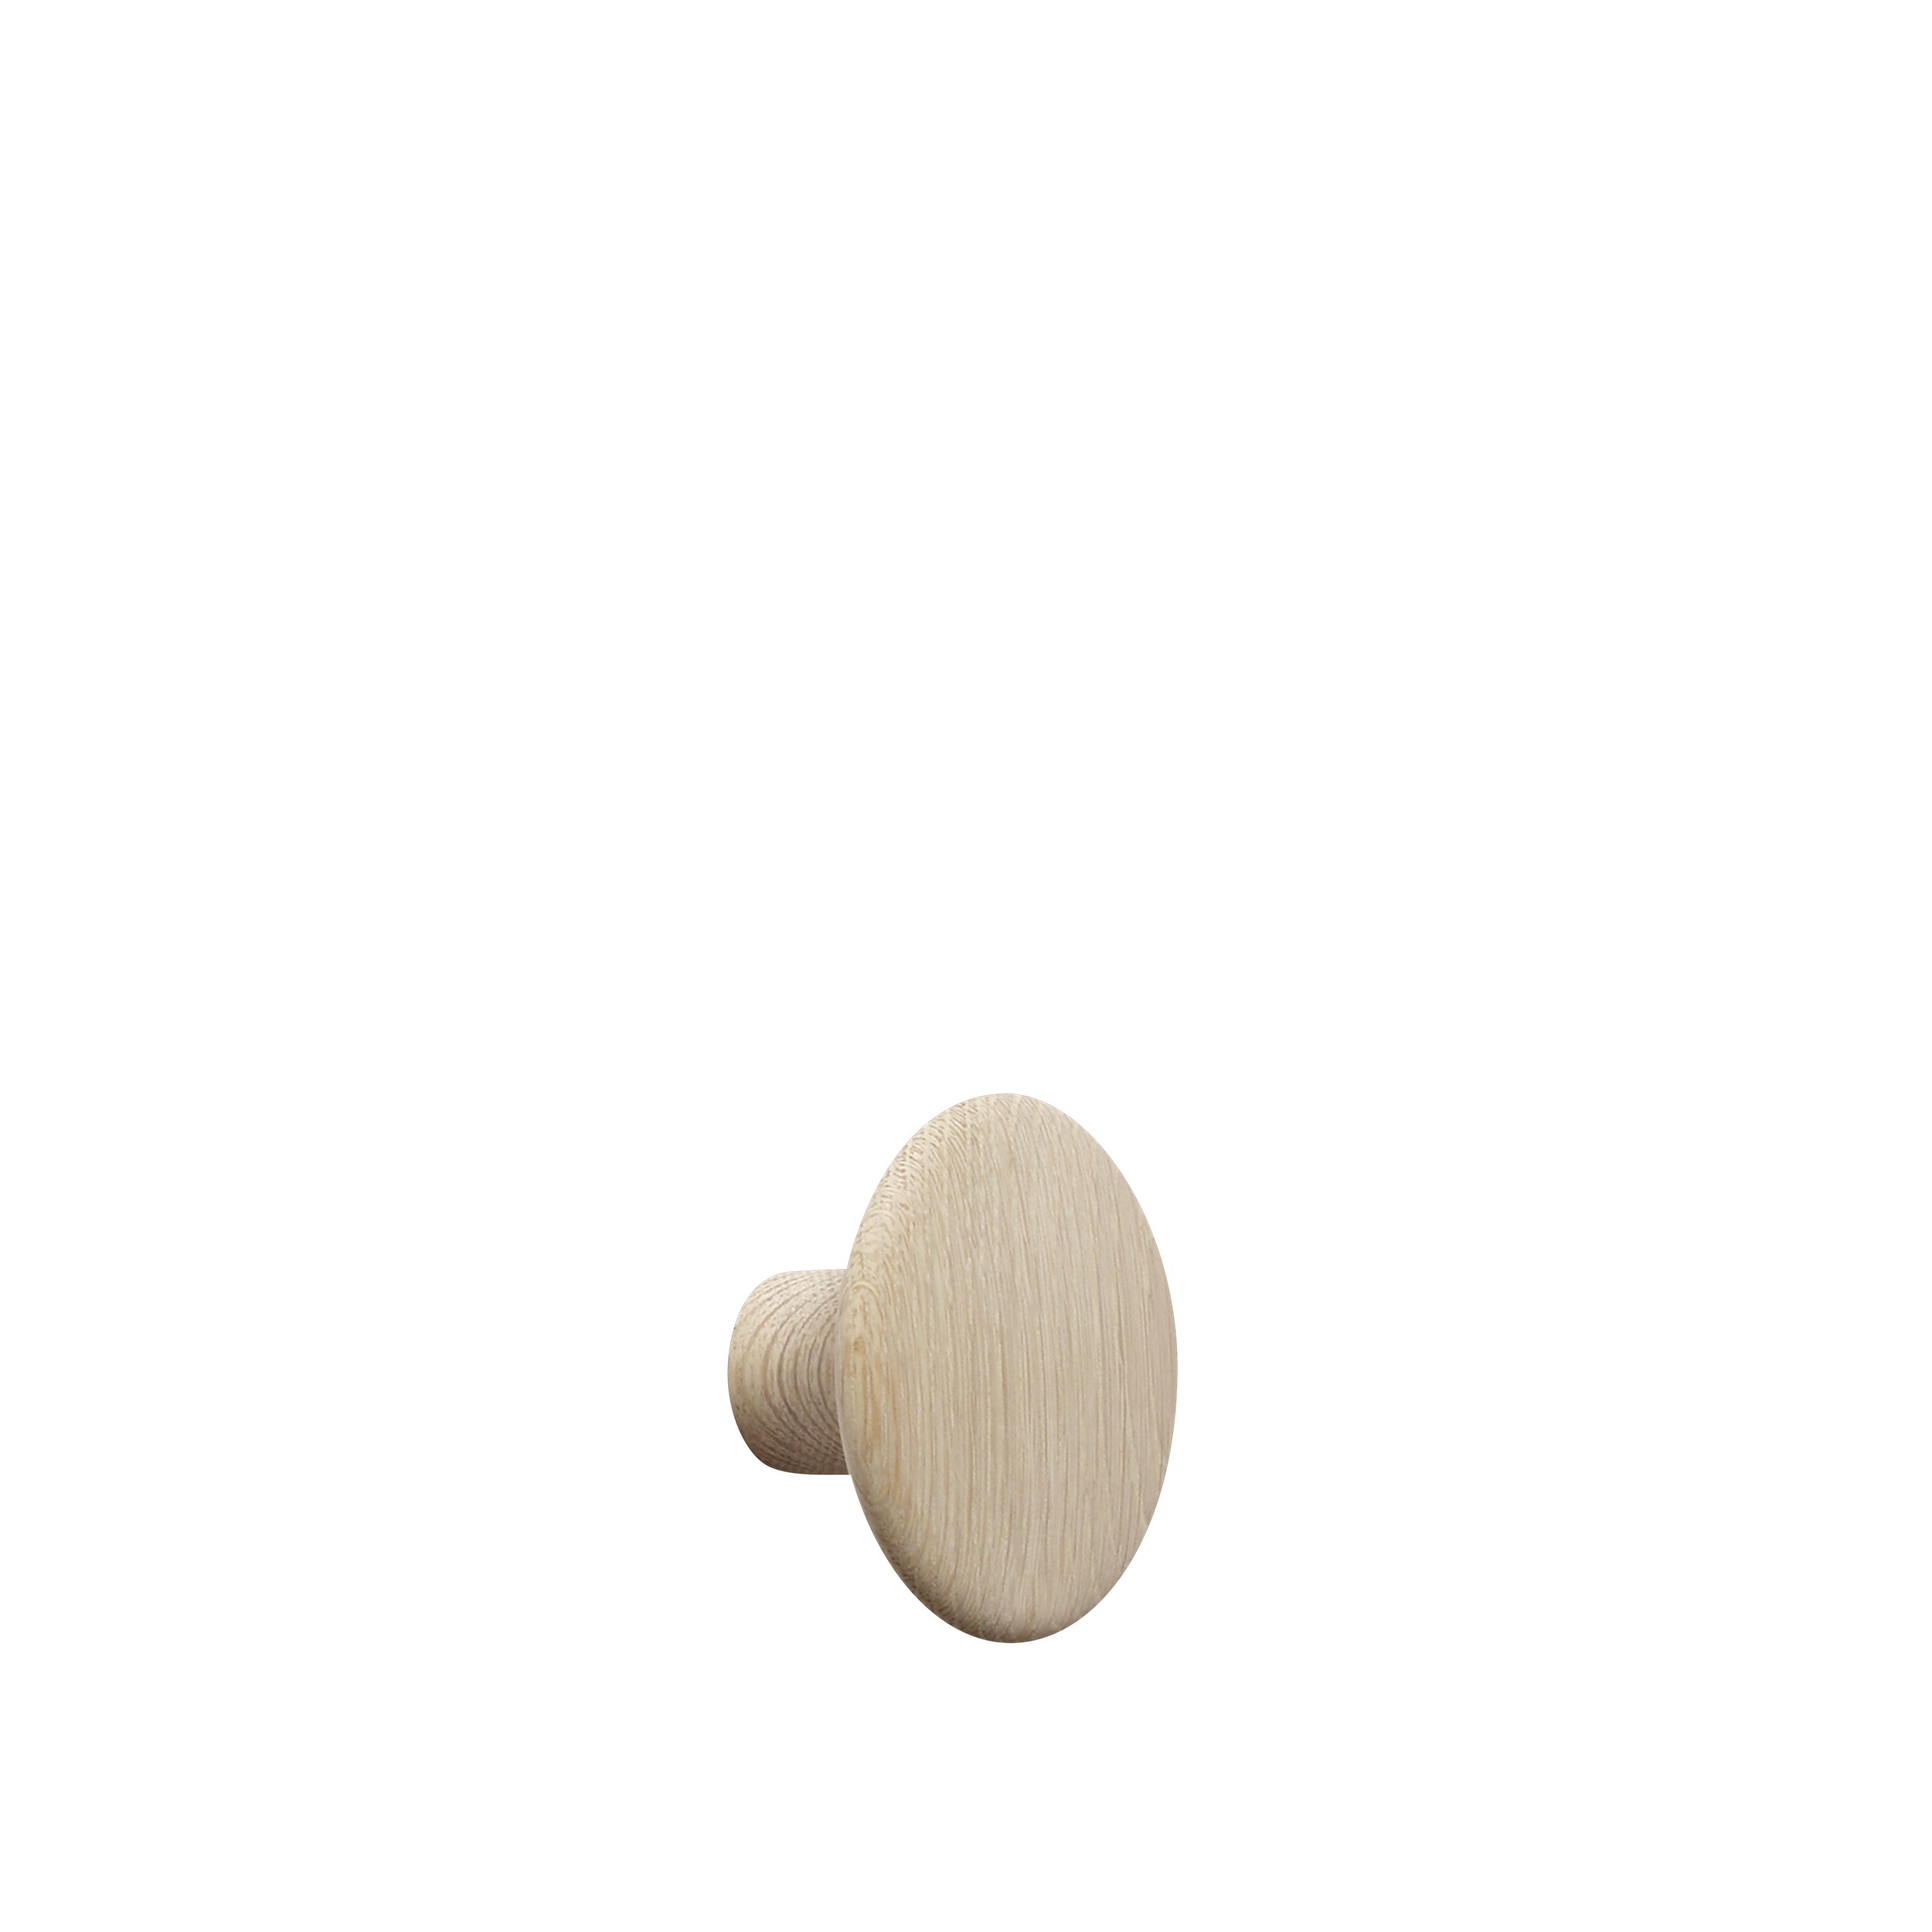 Dot wood small Ø 9 cm oak